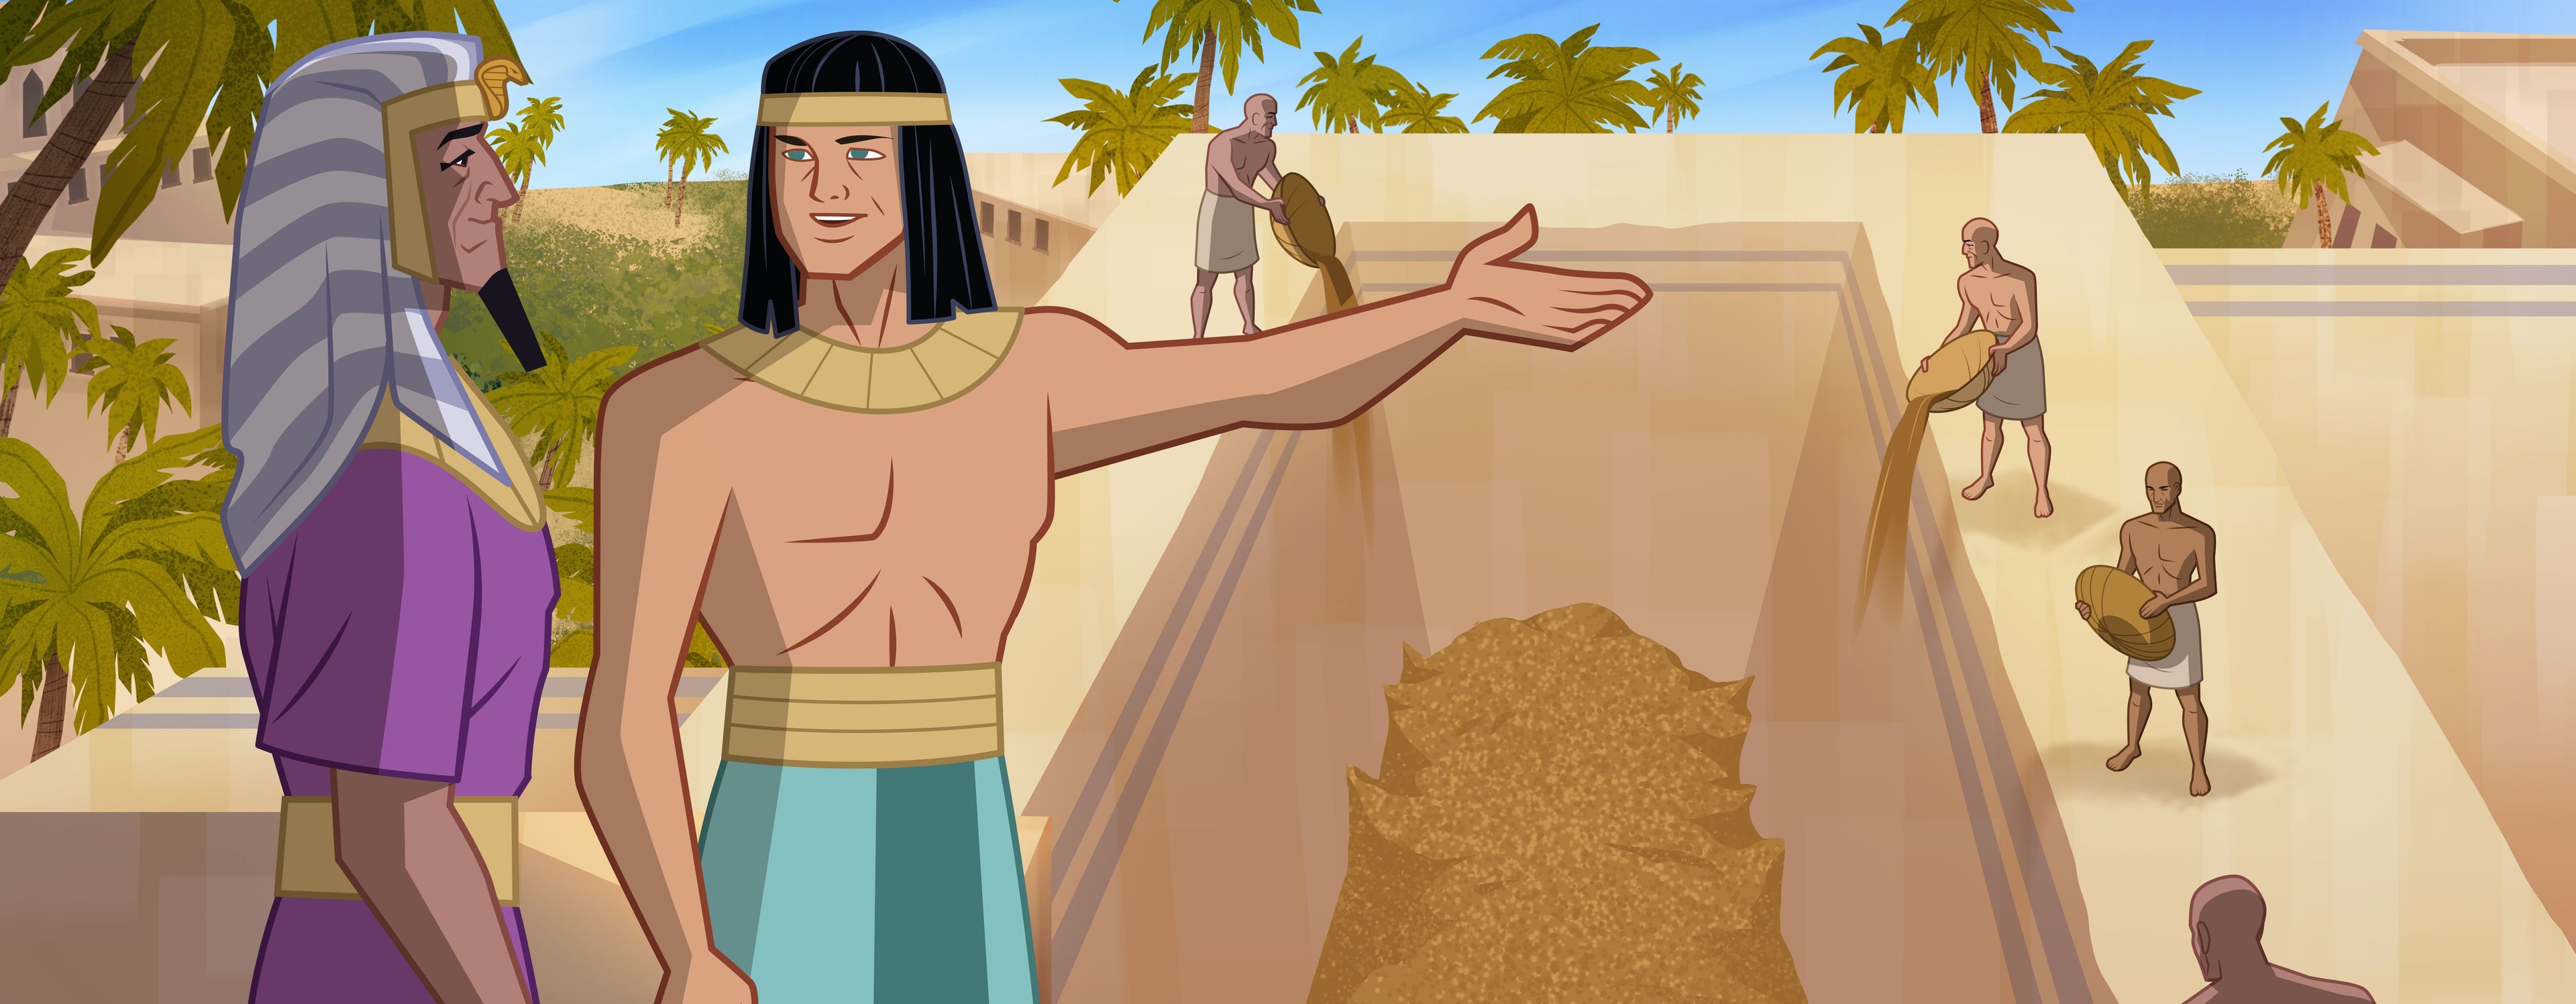 Illustration of Joseph showing Pharaoh food storage. Genesis 41:37–53